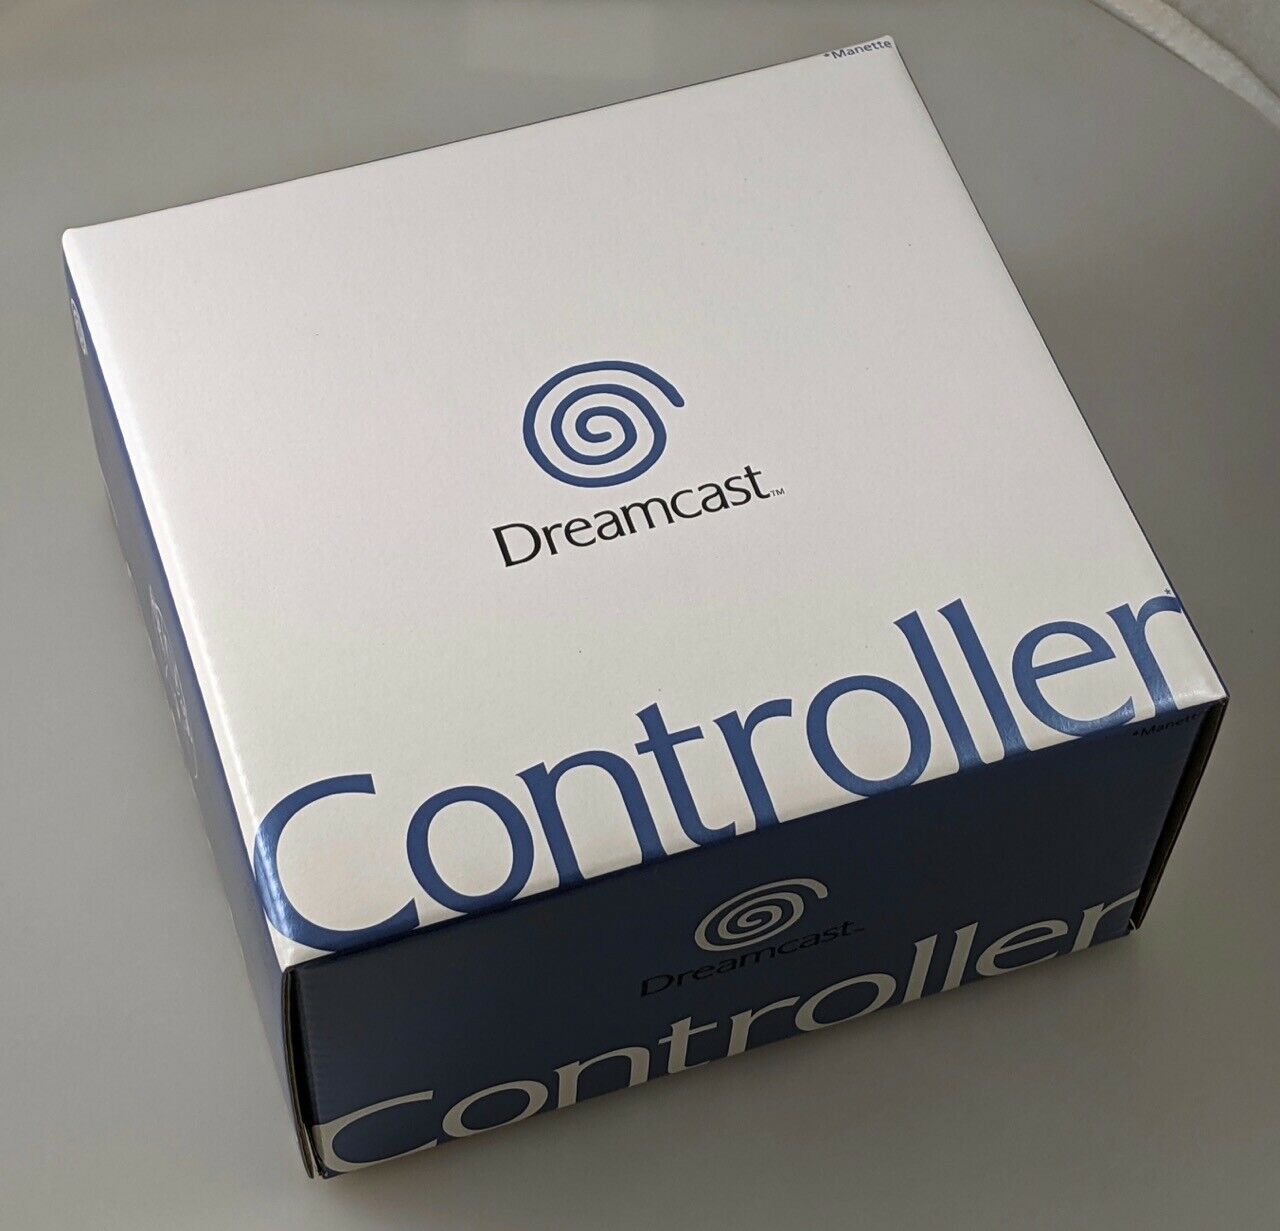 Sega Dreamcast Controller - (DC) Sega Dreamcast (European Import) Accessories SEGA   